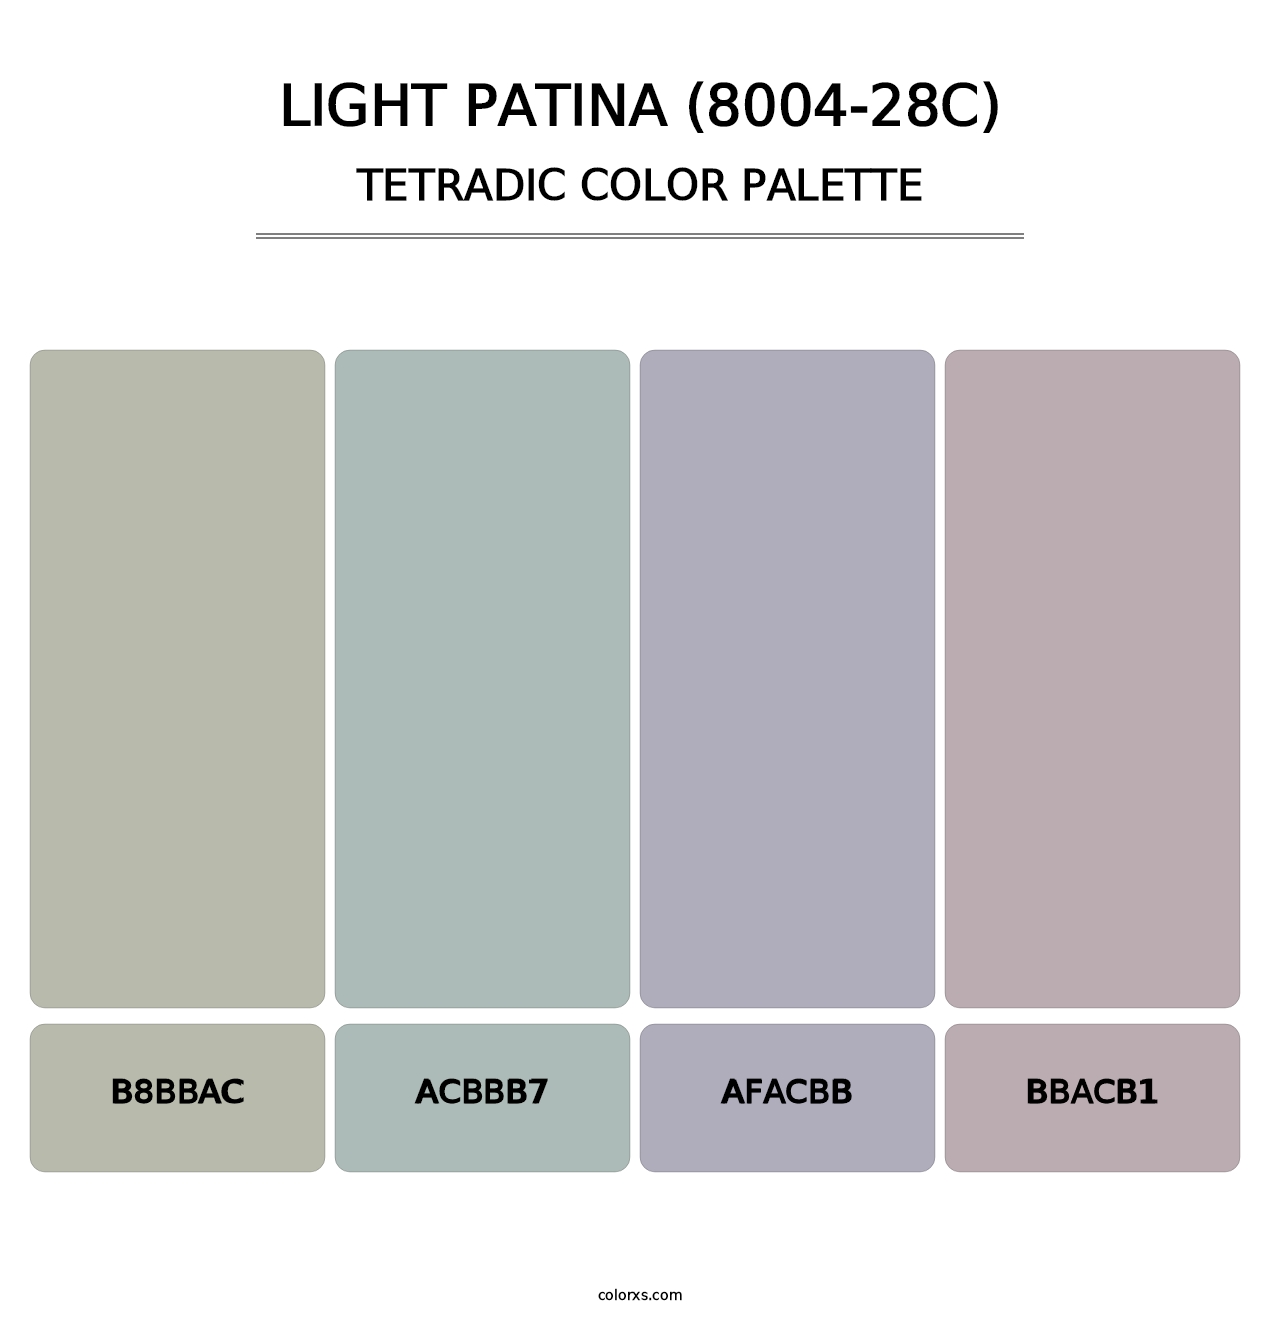 Light Patina (8004-28C) - Tetradic Color Palette